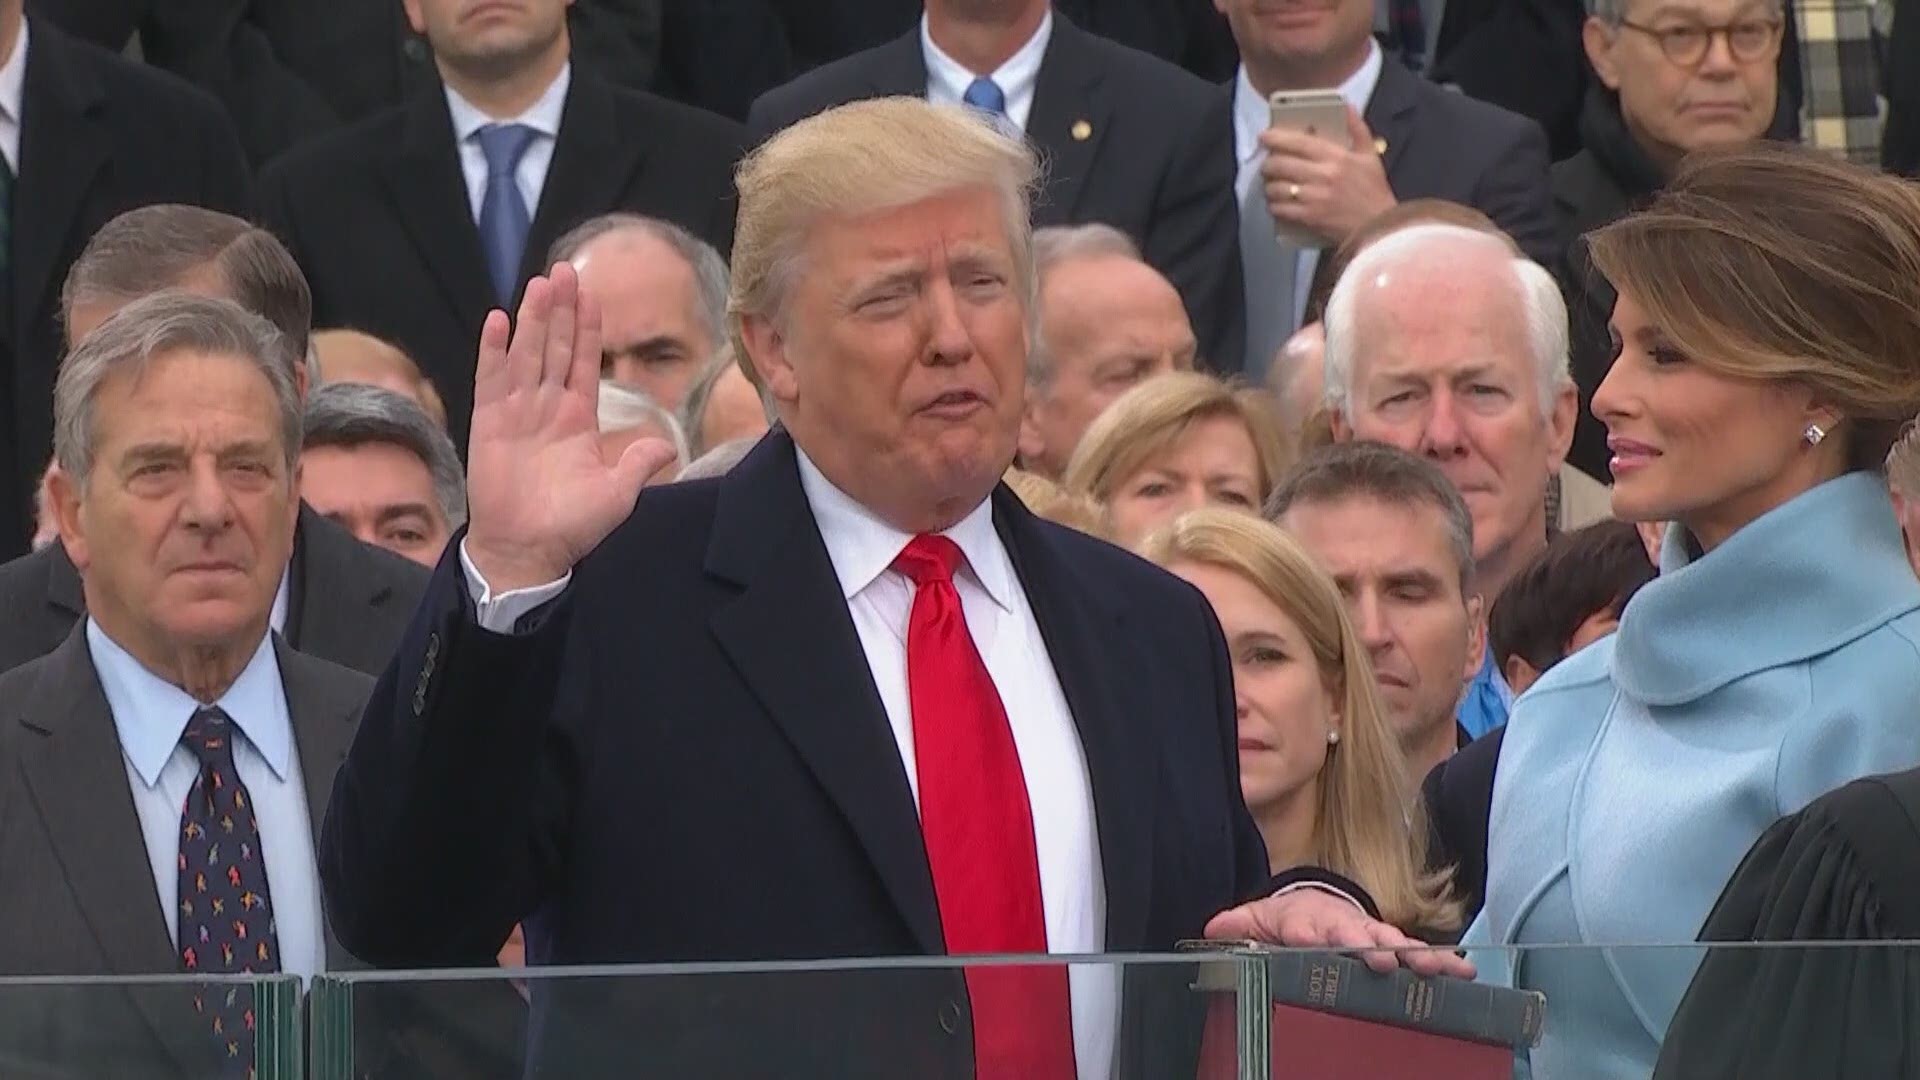 Donald Trump sworn in as president